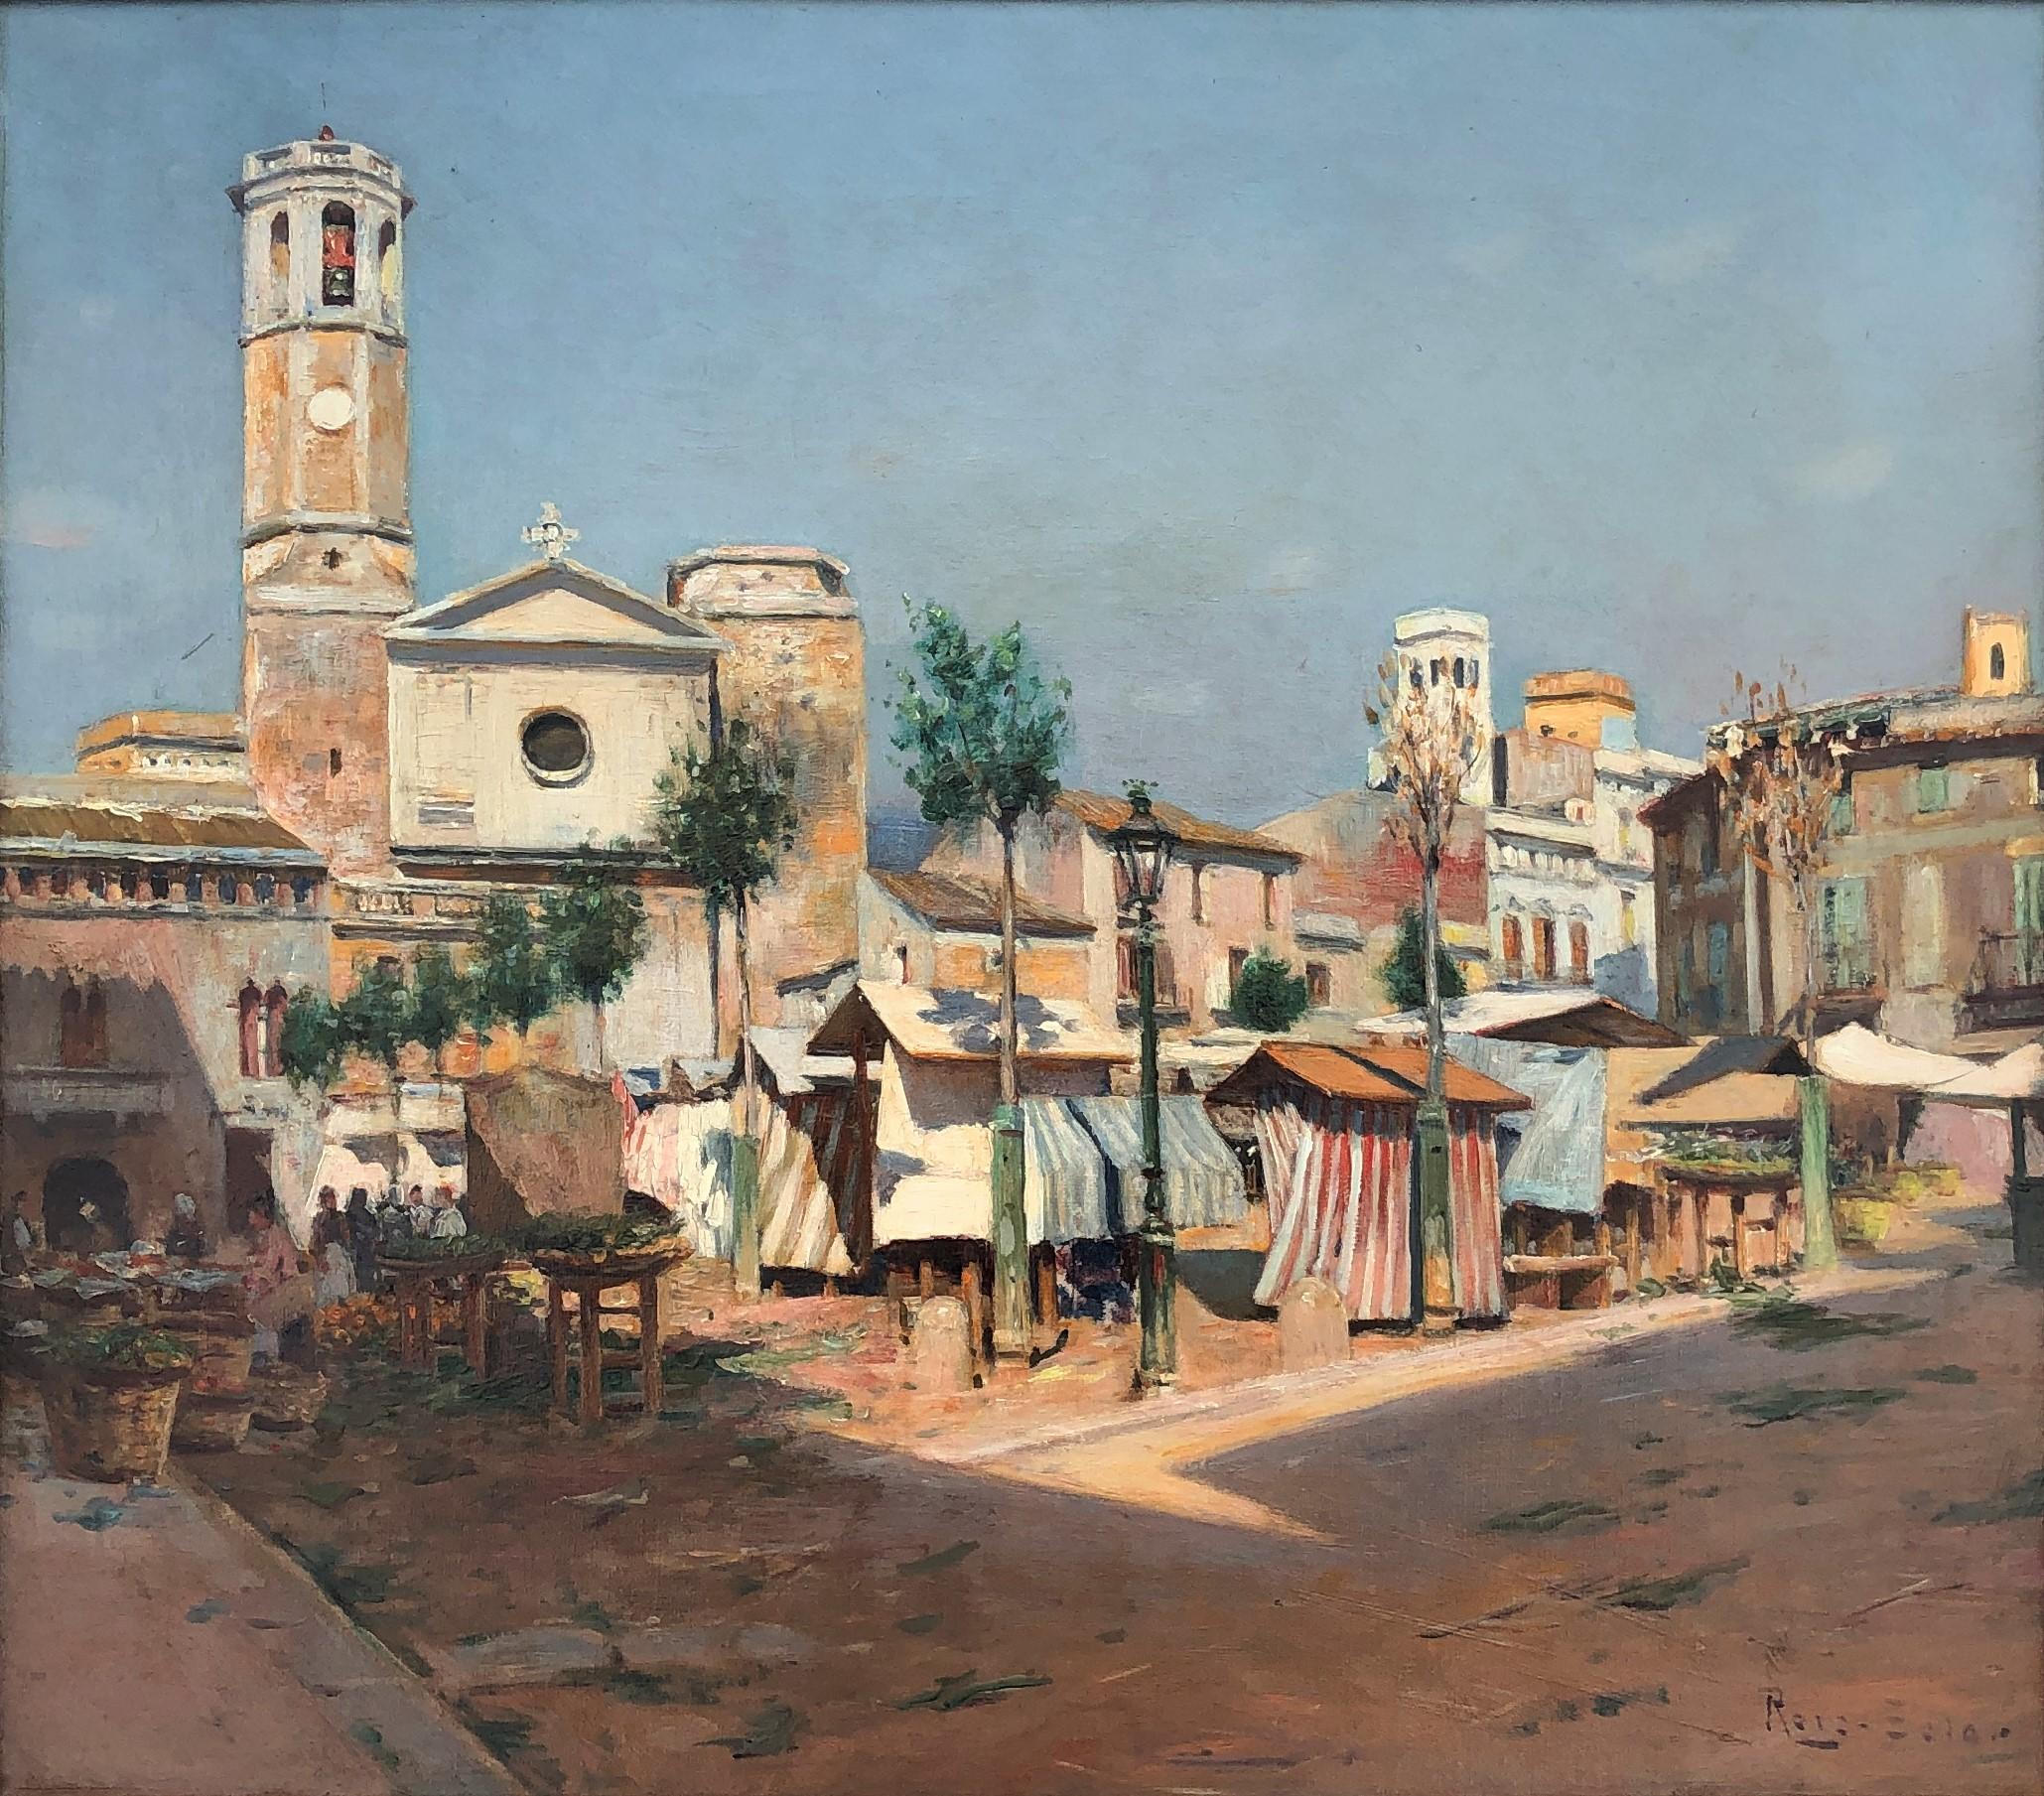 Juan Roig y Soler Landscape Painting – Markttag Spanien Original Öl auf Leinwand xix Jahrhundert 